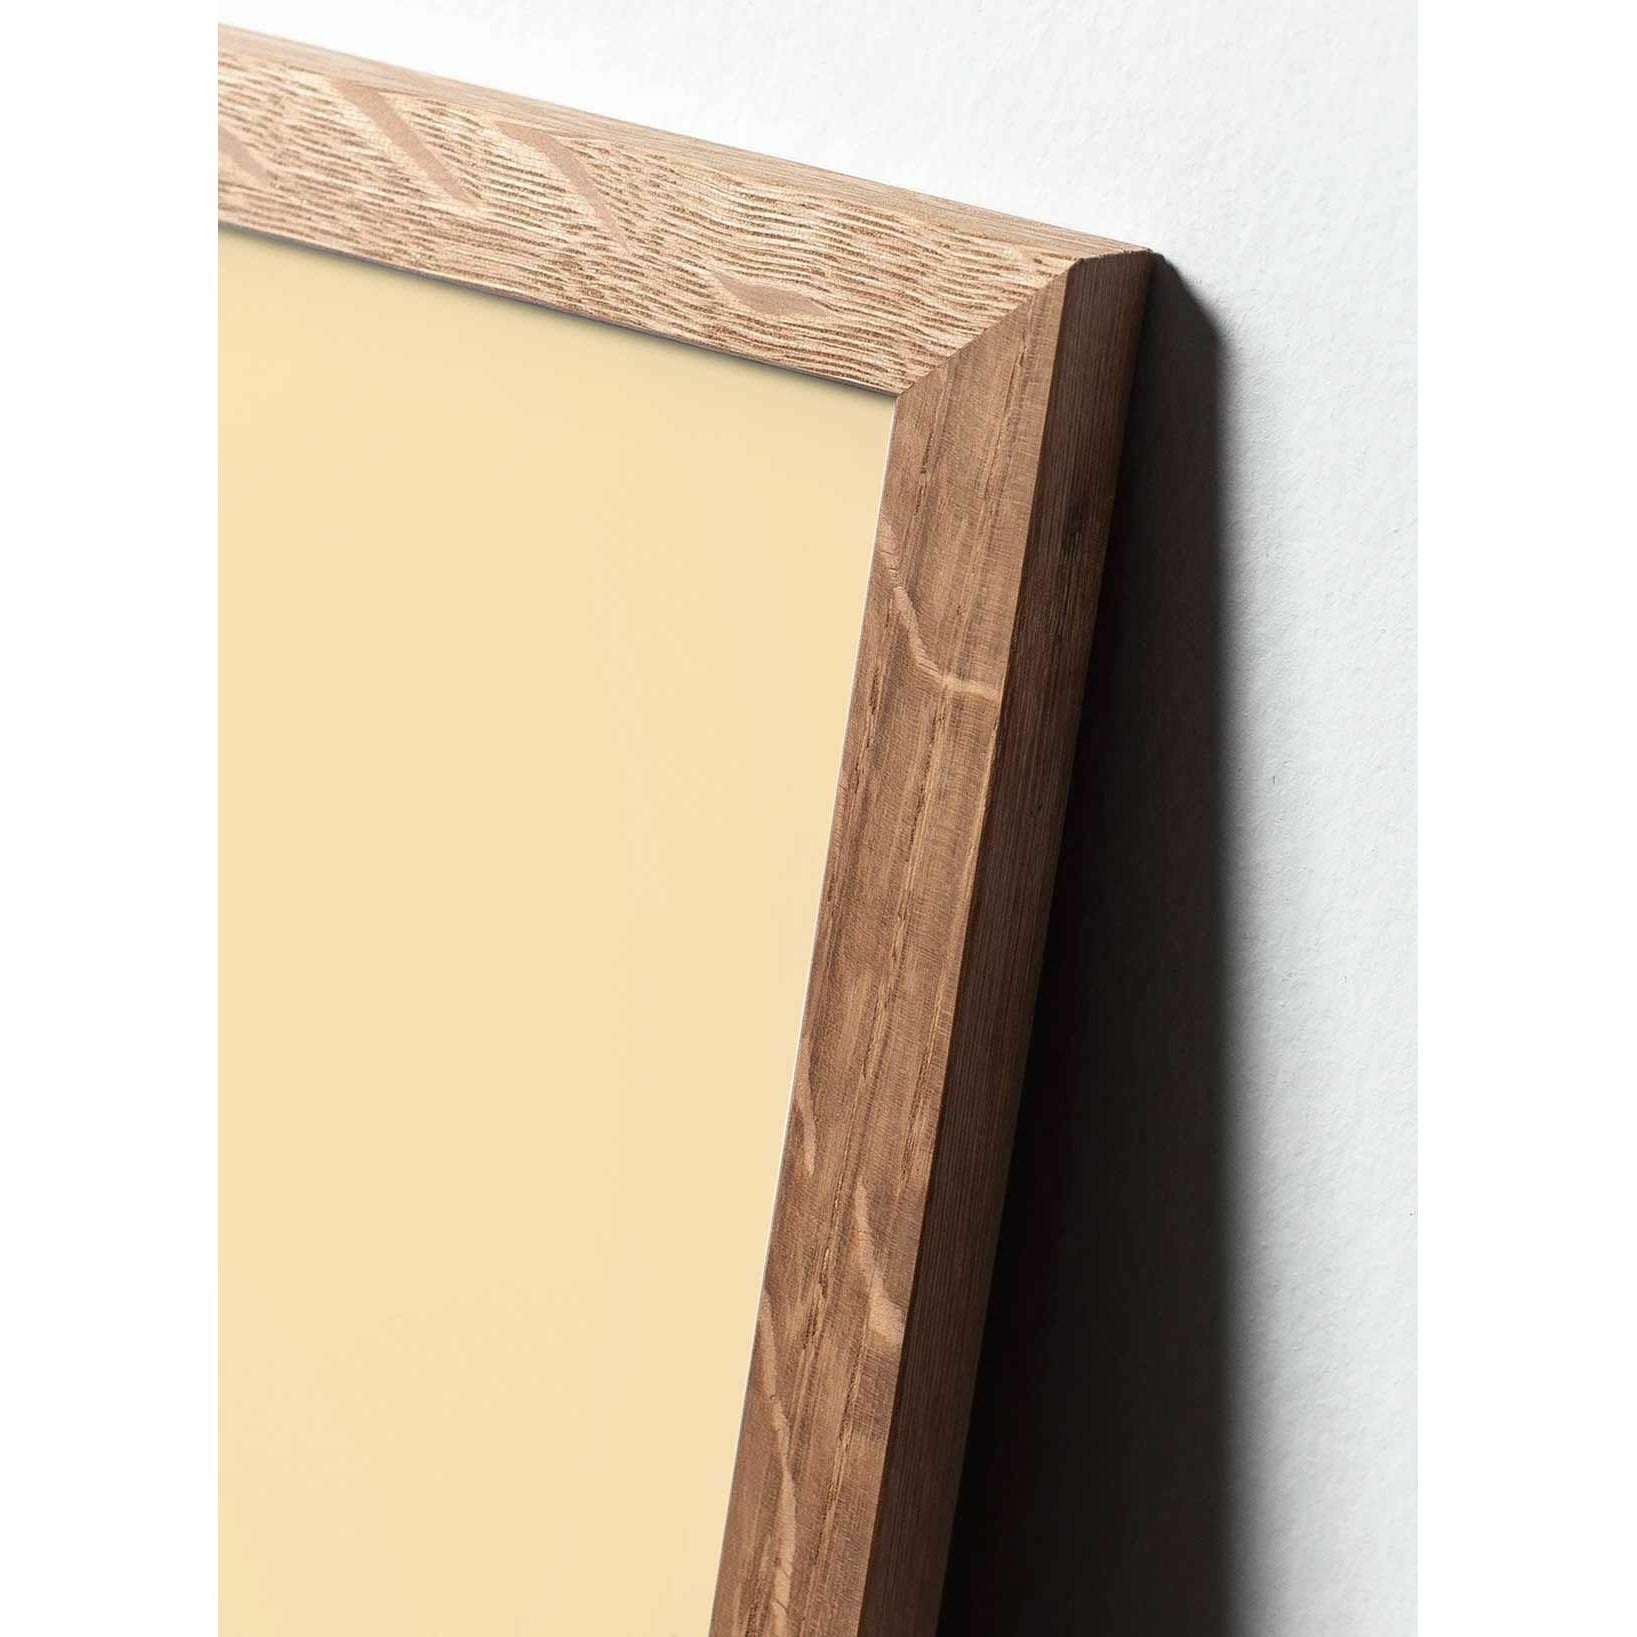 Póster de línea Swan de creación, marco hecho de madera clara 70 x100 cm, fondo blanco